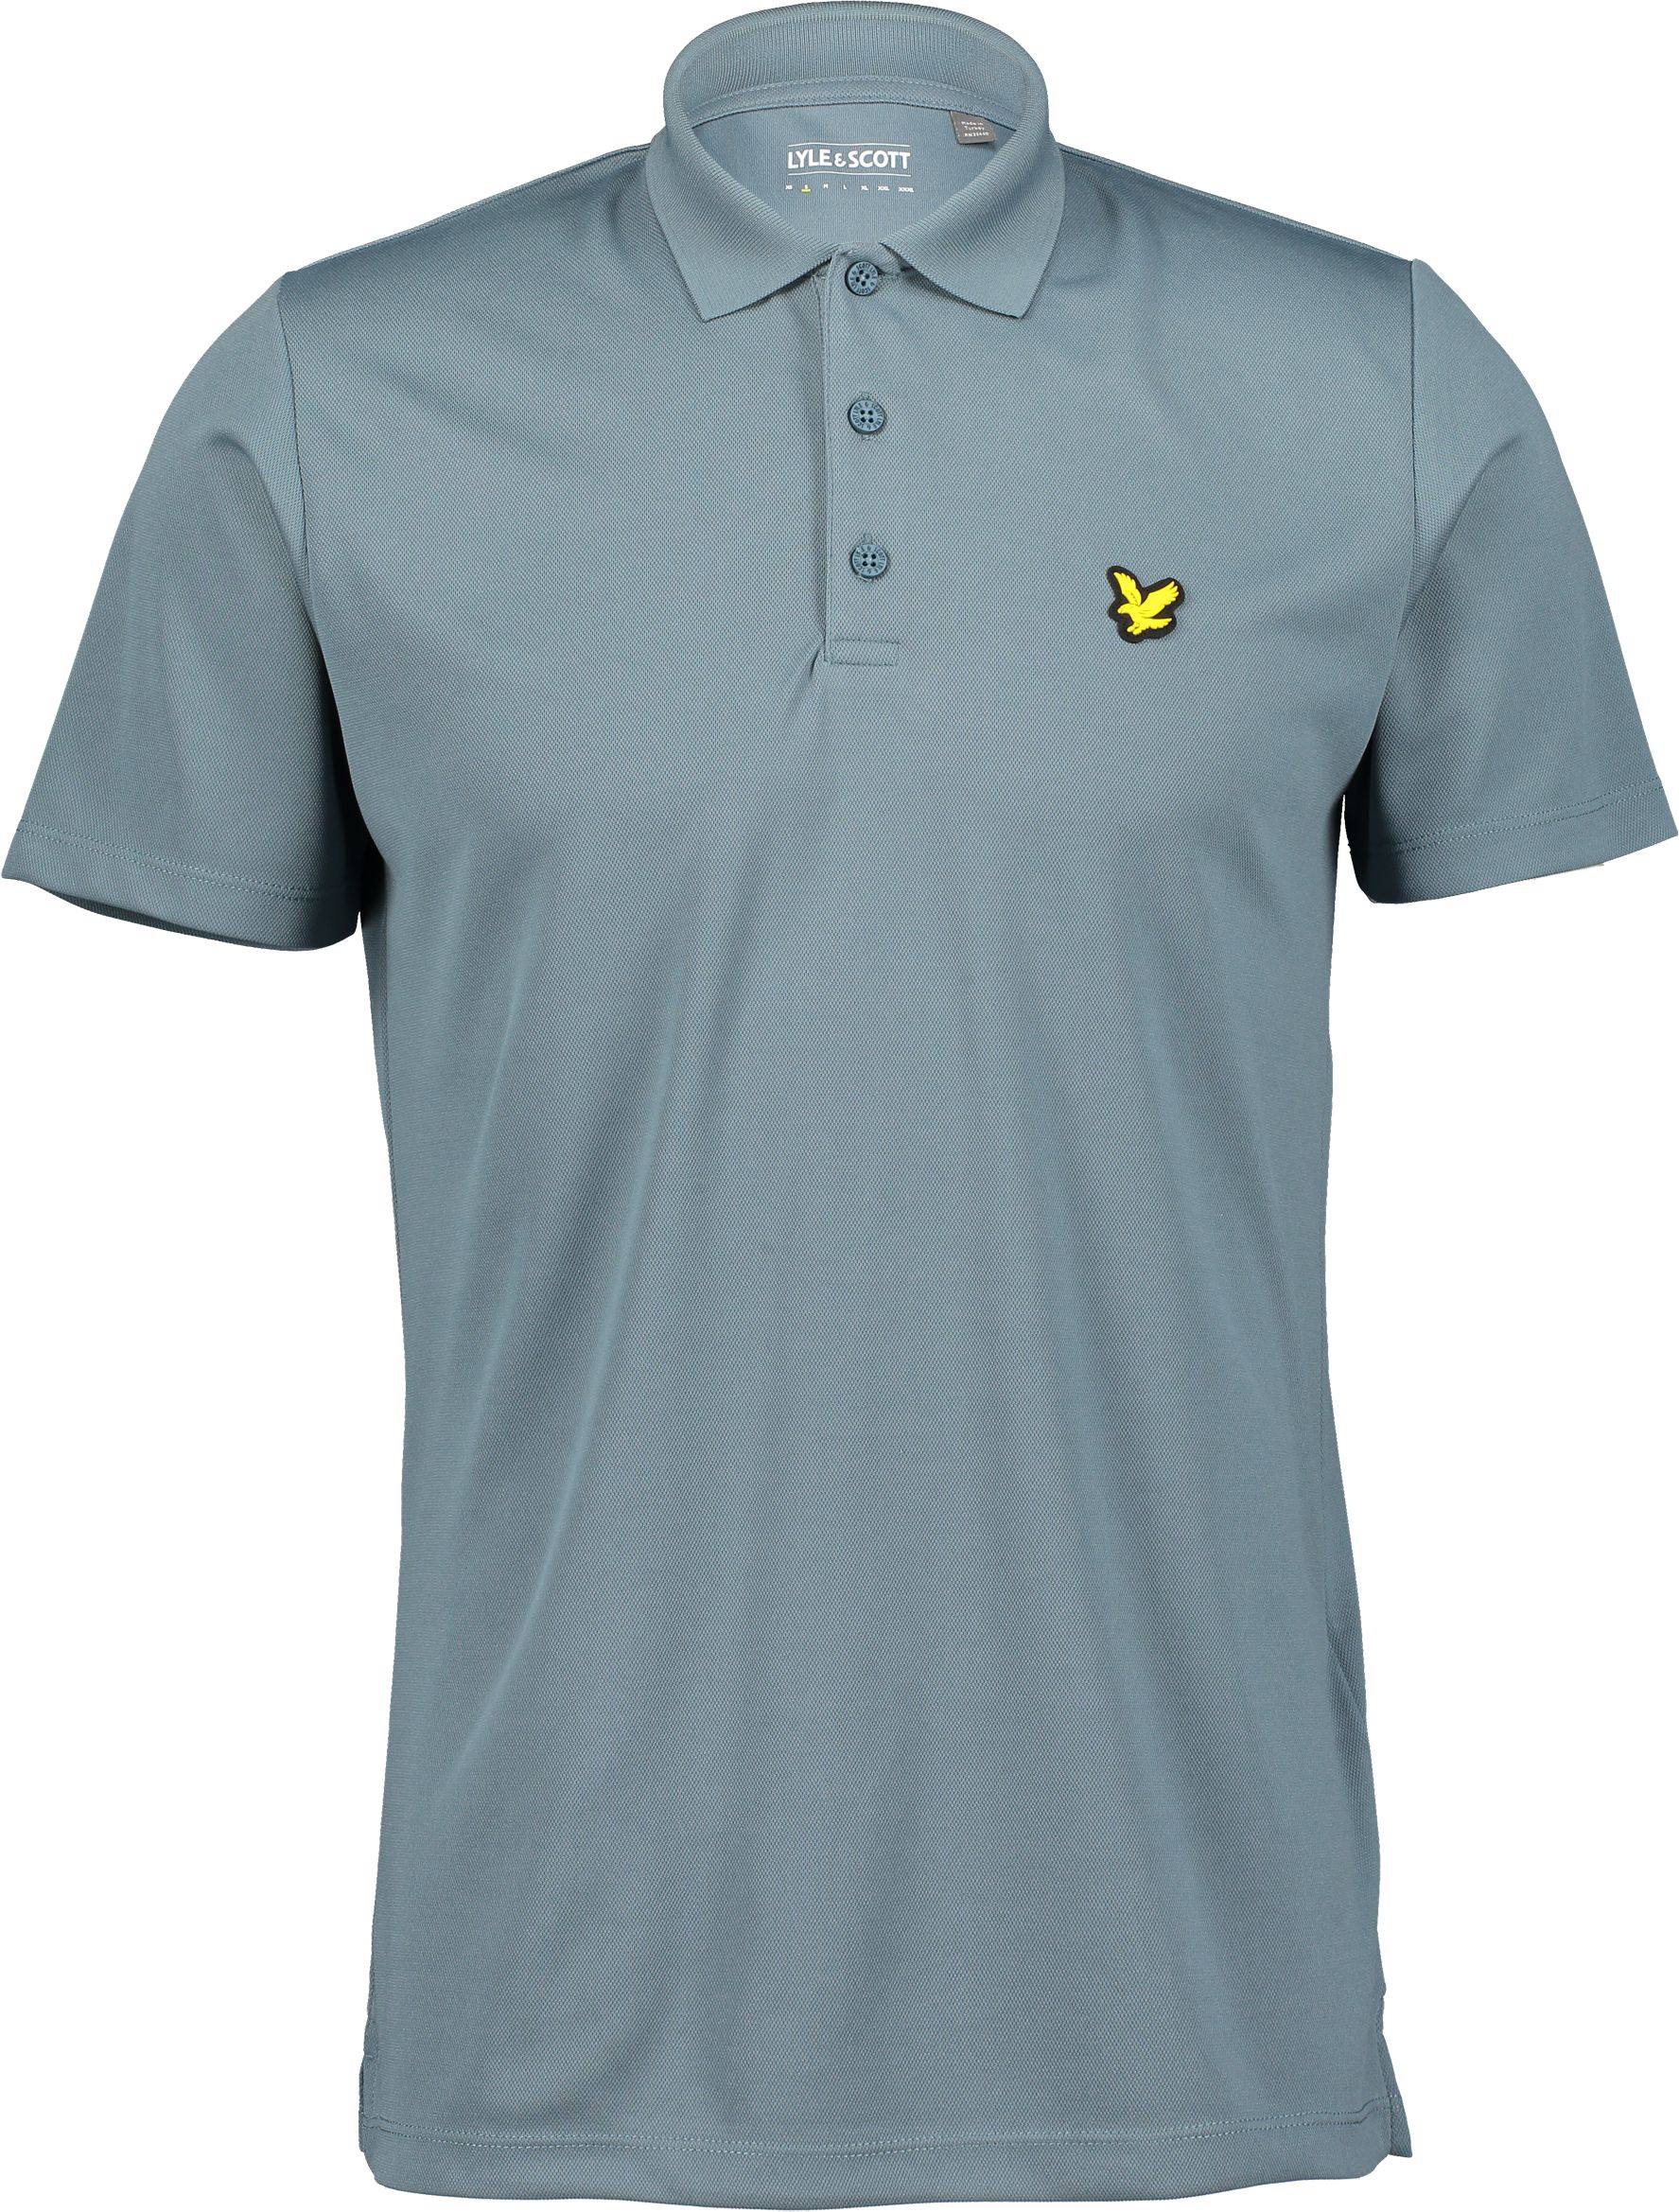 LYLE & SCOTT, Golf Tech Polo Shirt